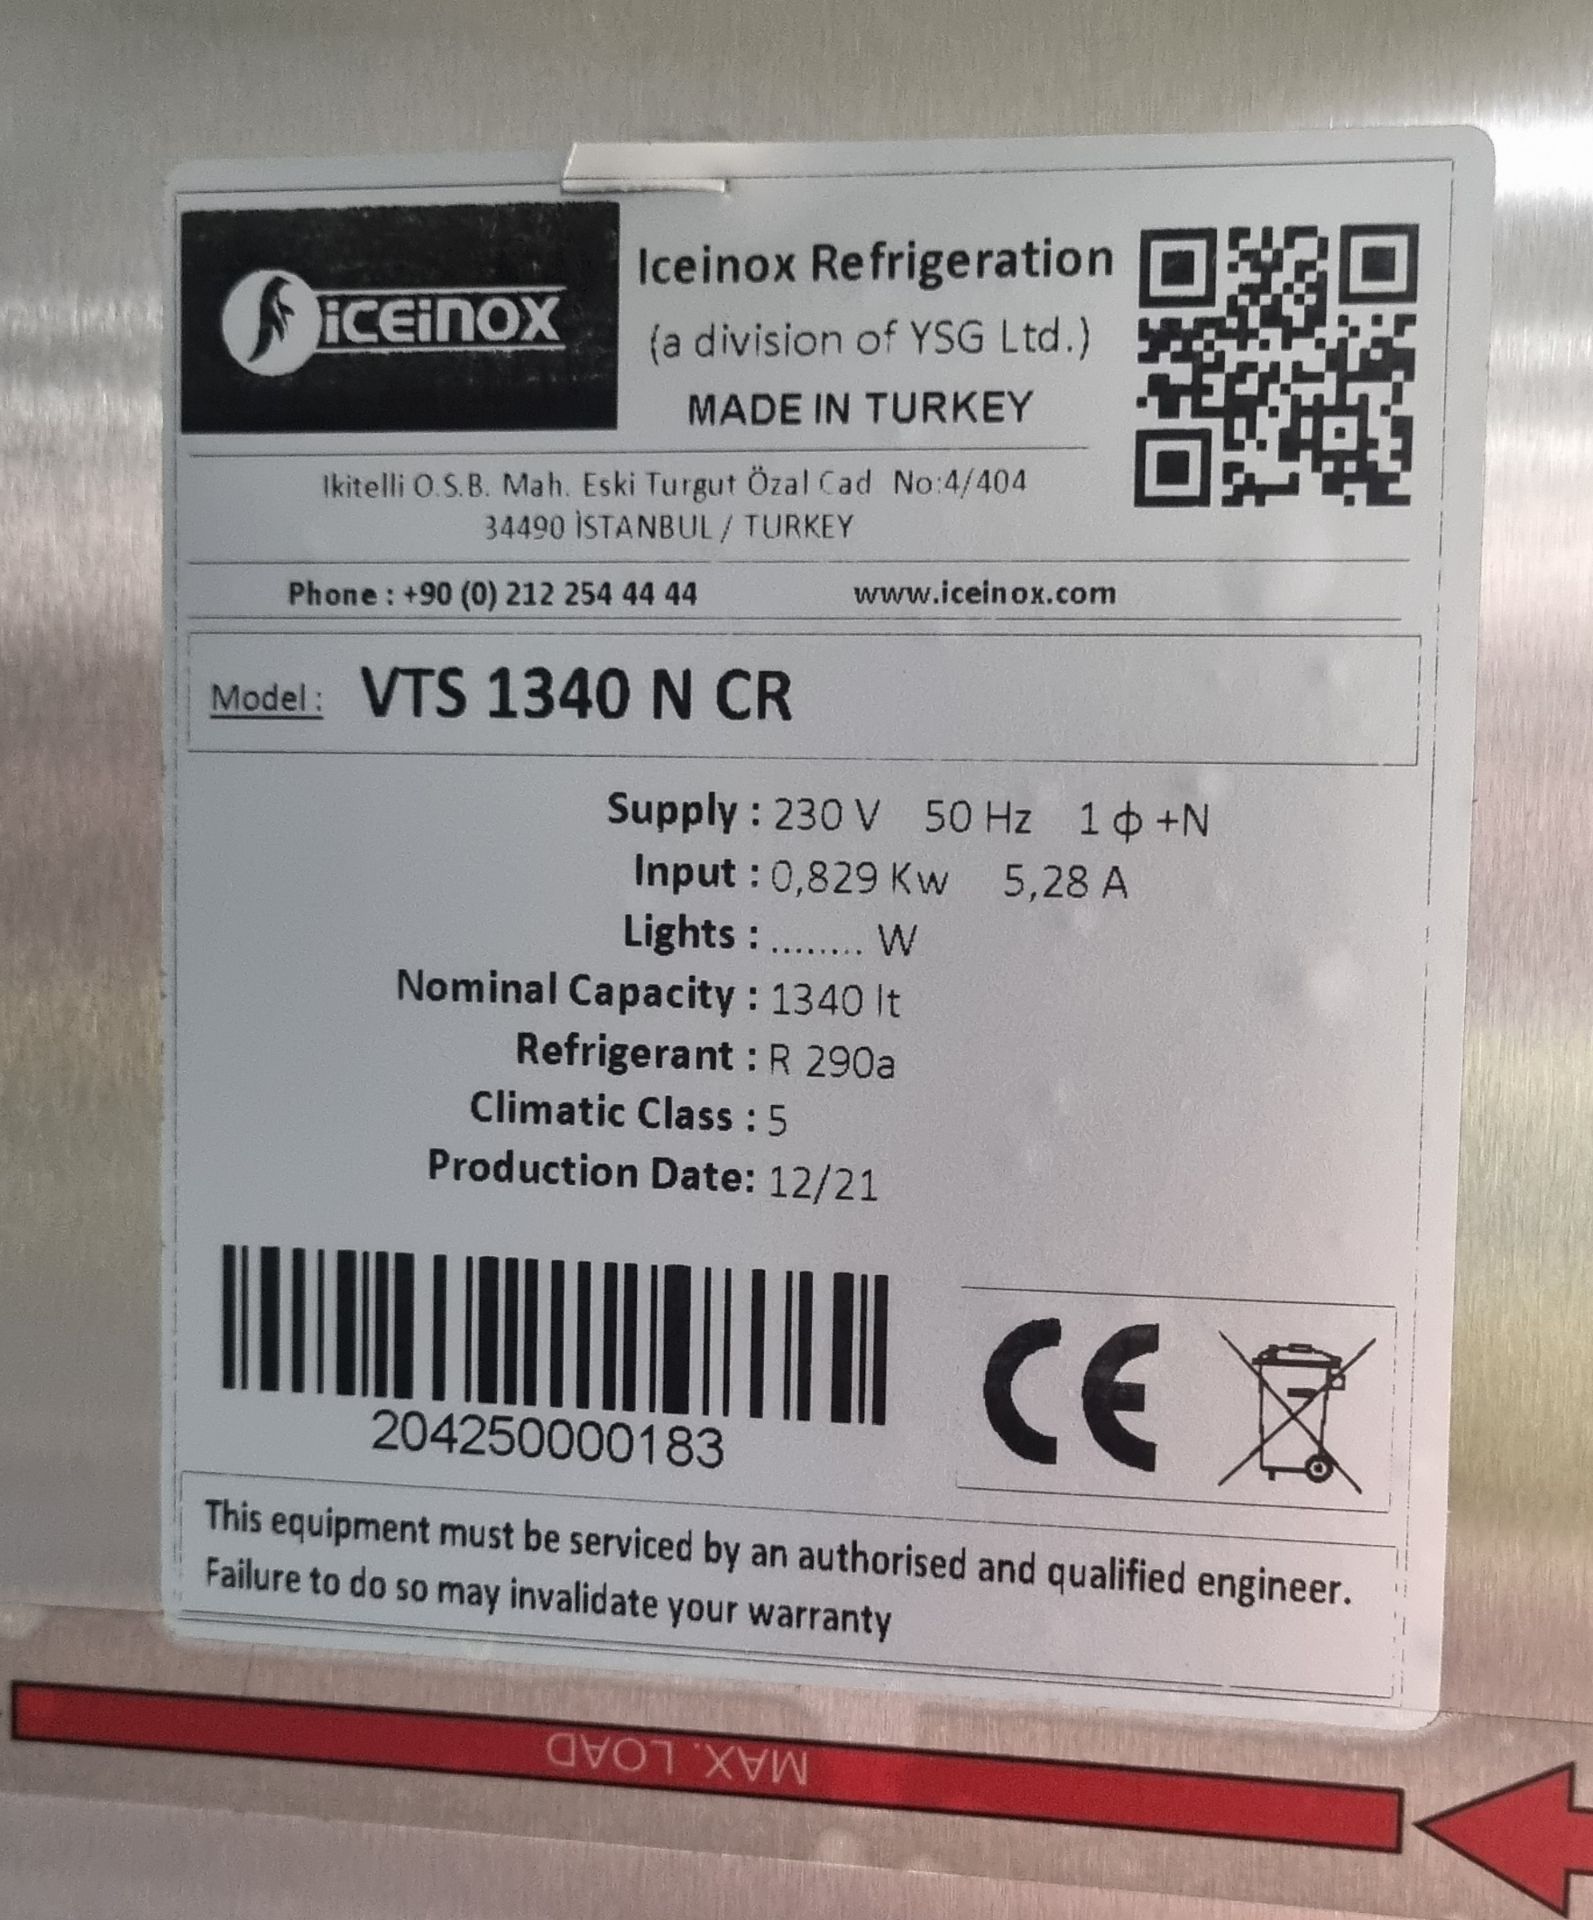 Iceinox VTS 1340 N CR stainless steel upright, double door freezer - Image 4 of 16